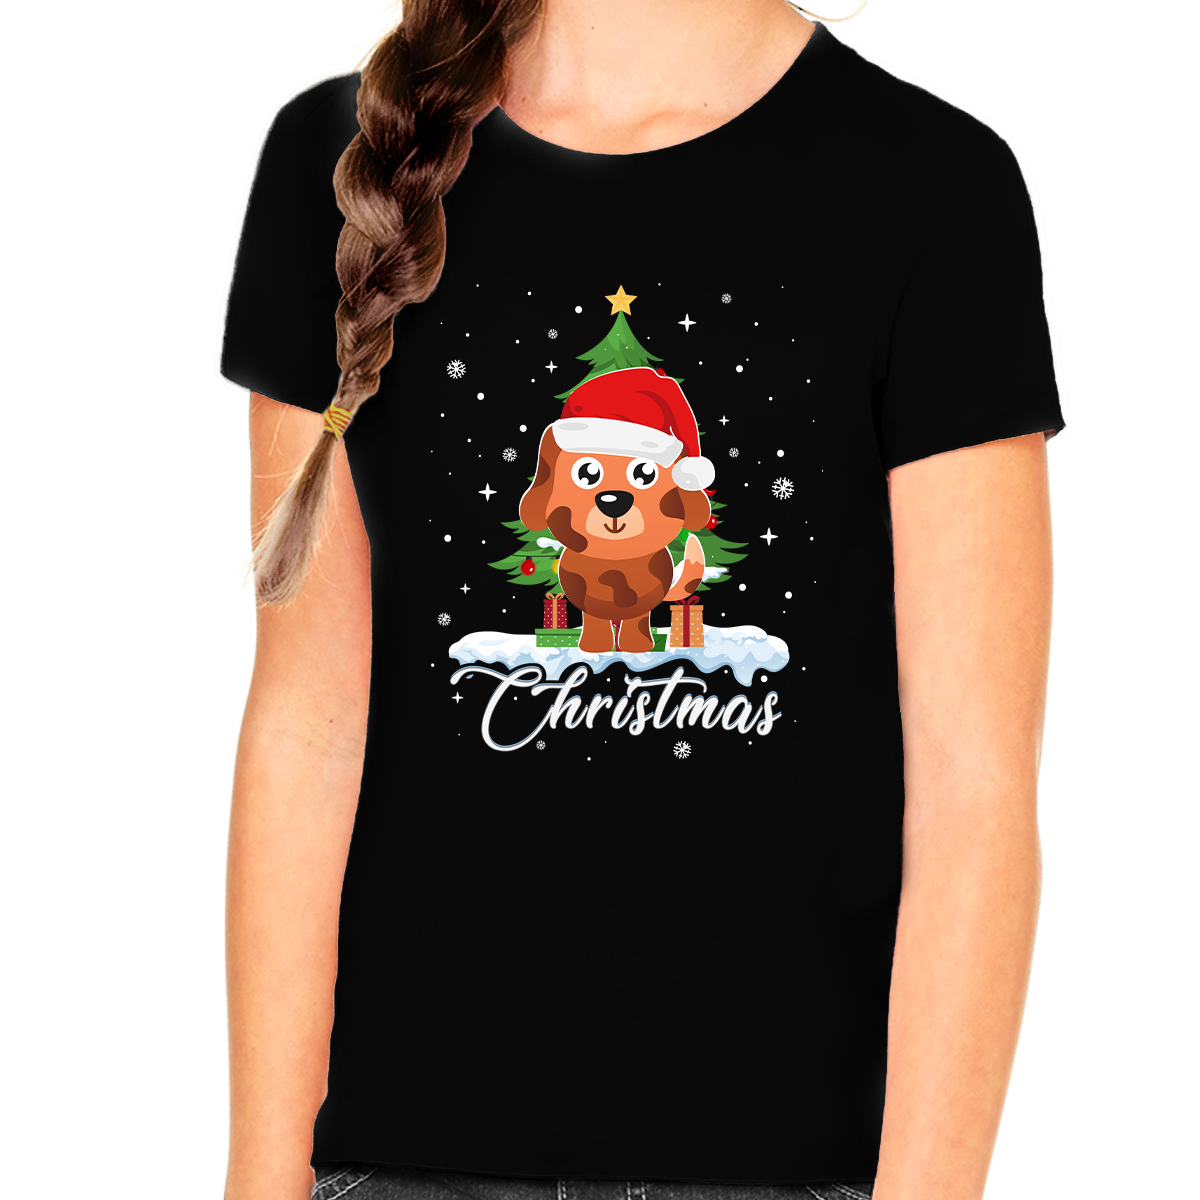 Girls Christmas Shirt Puppy Dog Christmas Outfits for Girls Cute Christmas Shirts for Kids